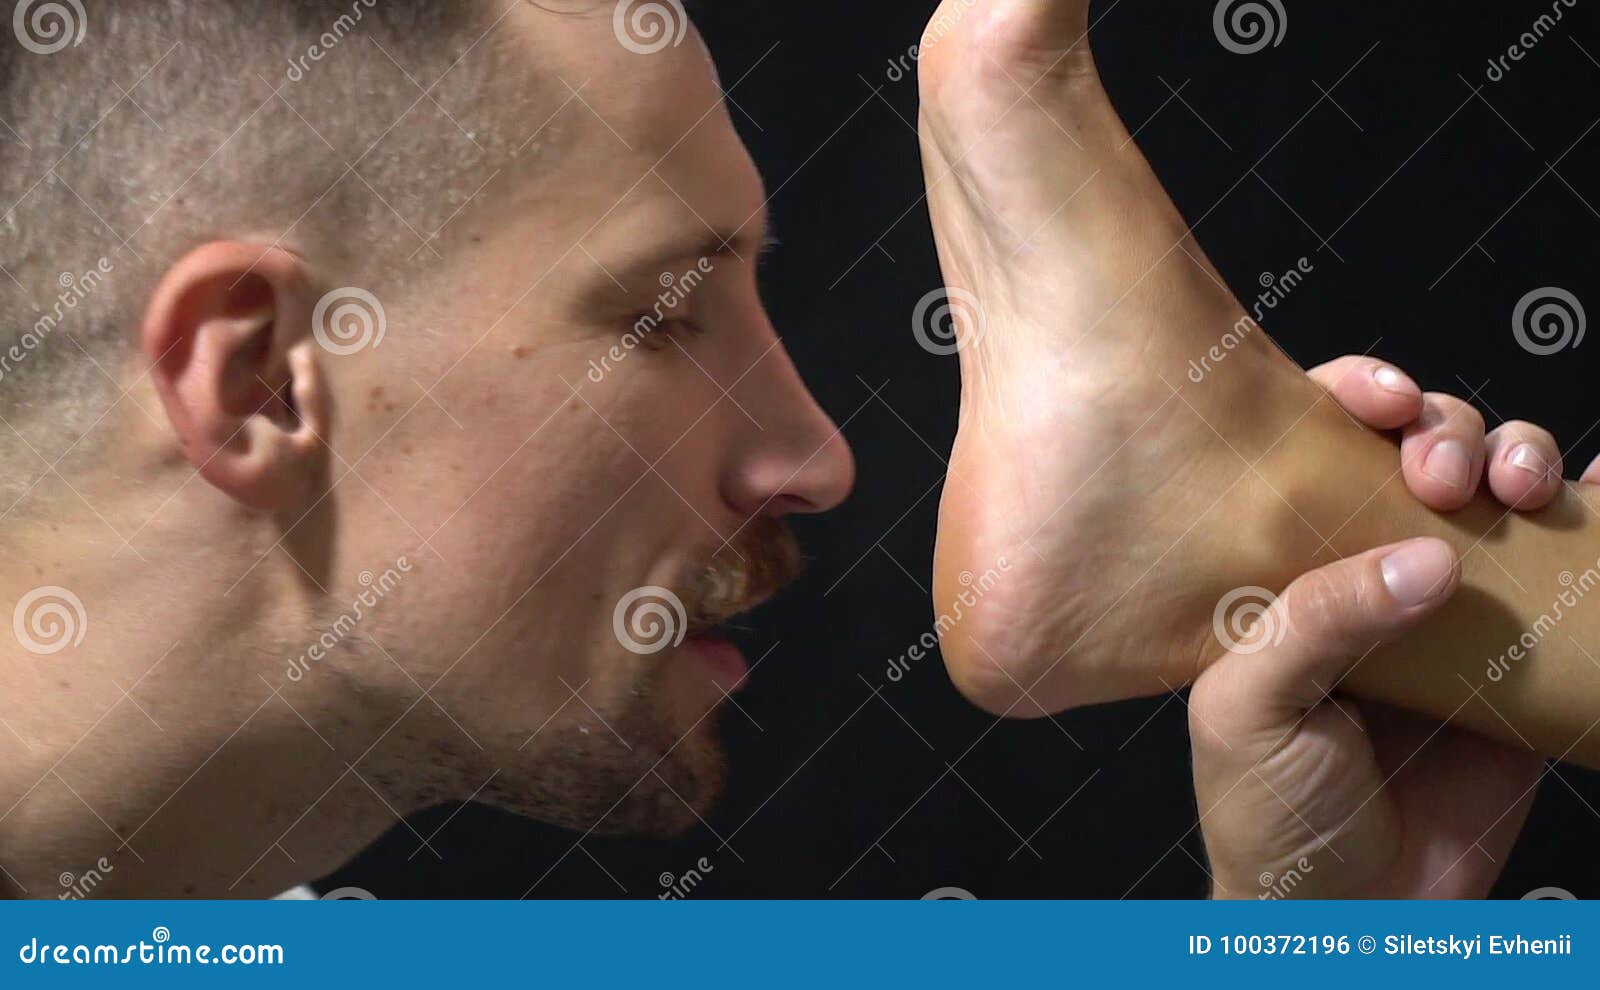 Pervert Foot Fetish